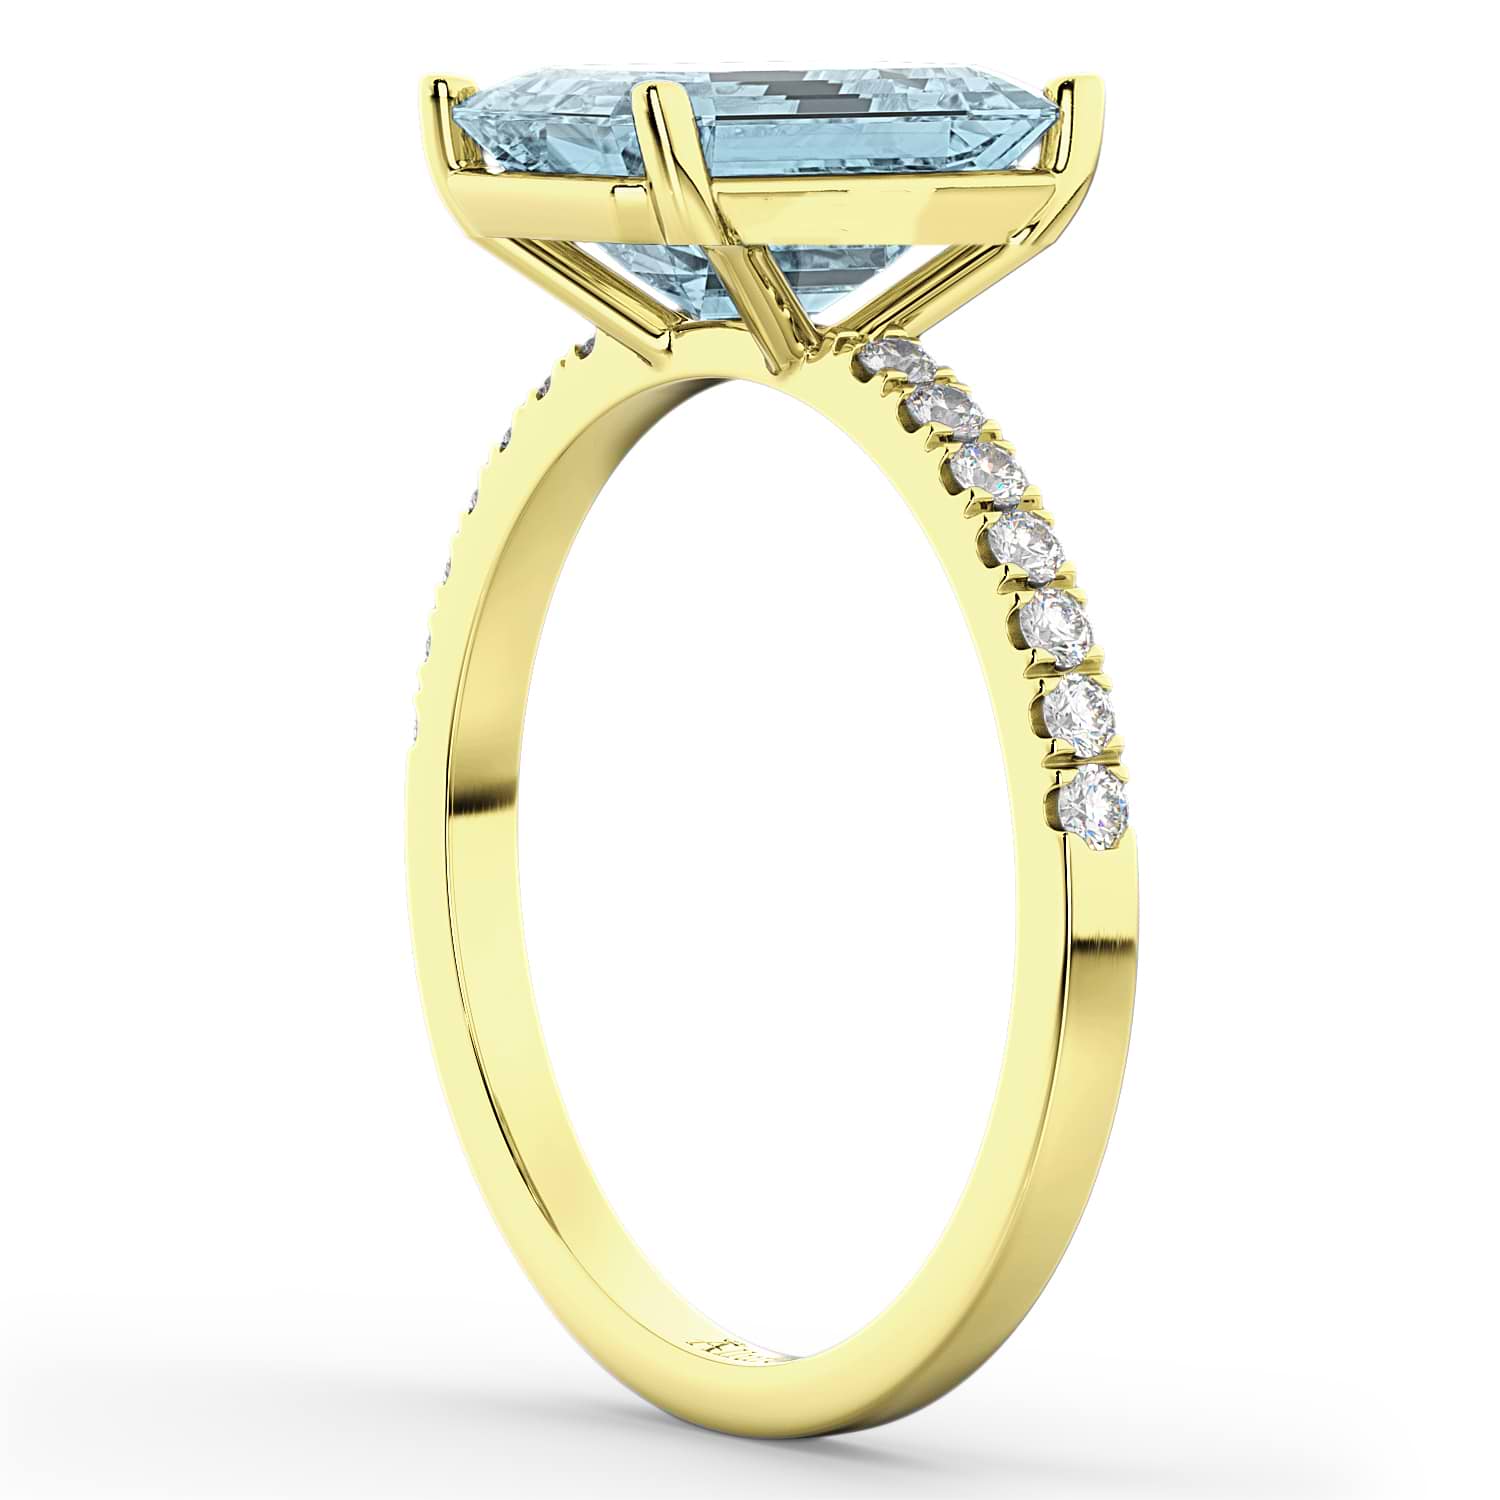 Emerald Cut Aquamarine & Diamond Engagement Ring 14k Yellow Gold (2.96ct)